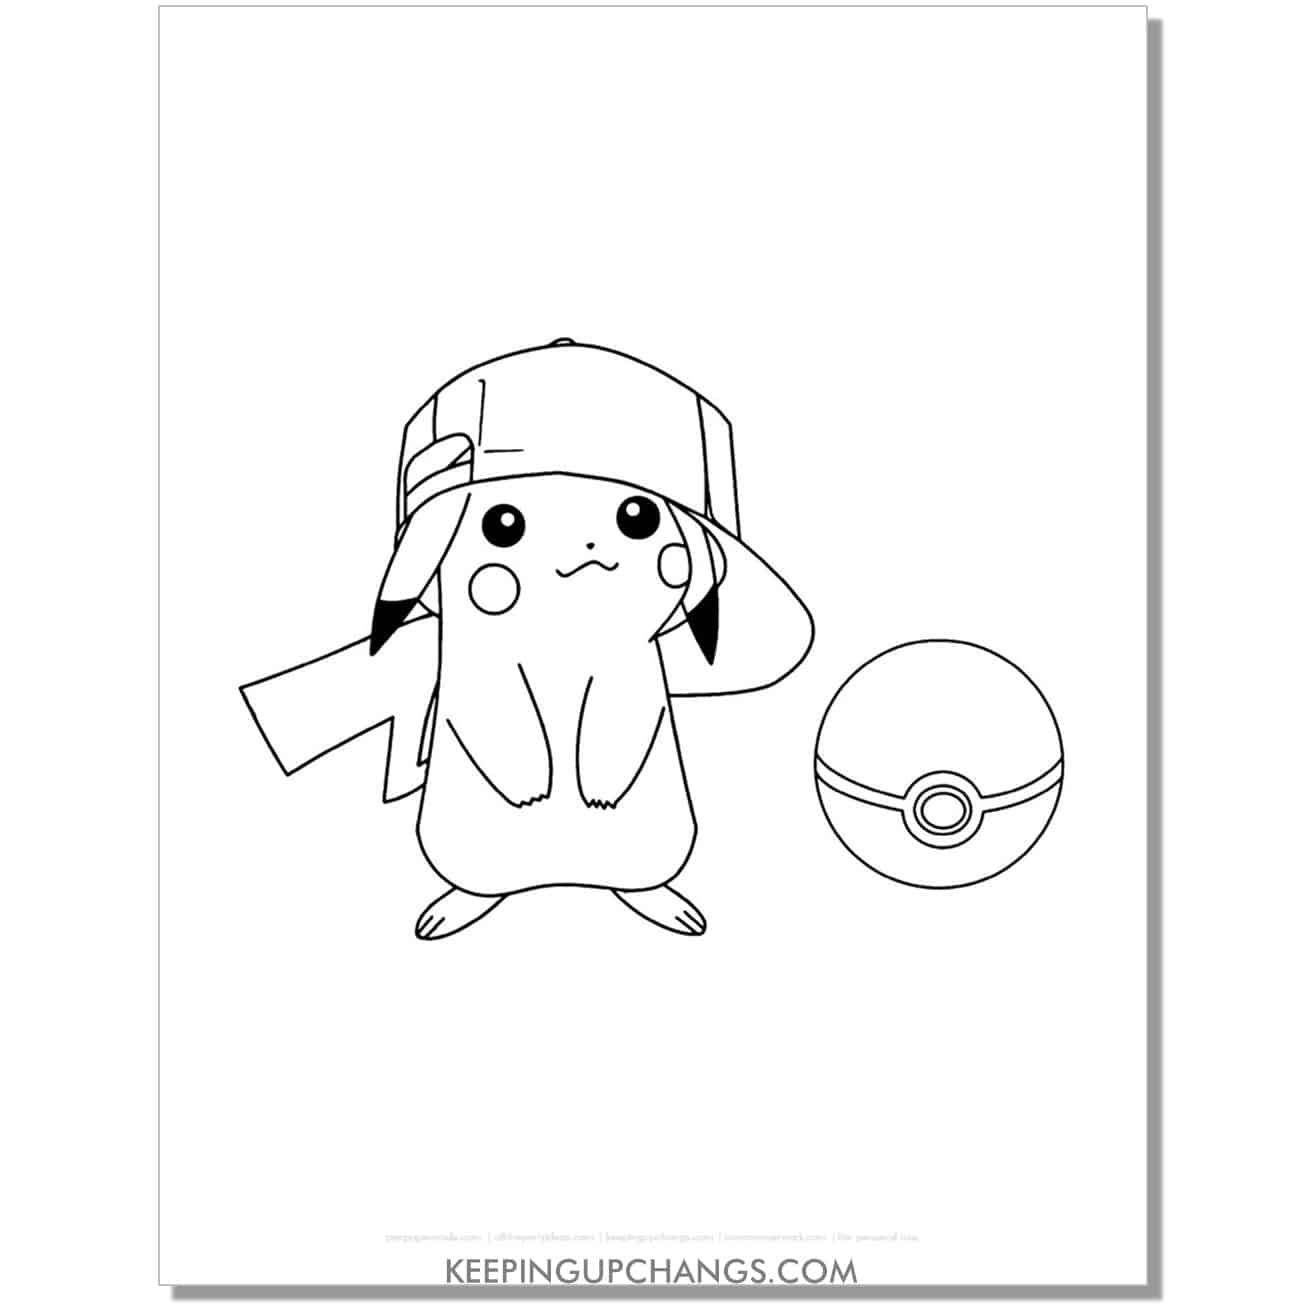 pikachu wearing ash's hat with pokeball pokemon coloring page, sheet.